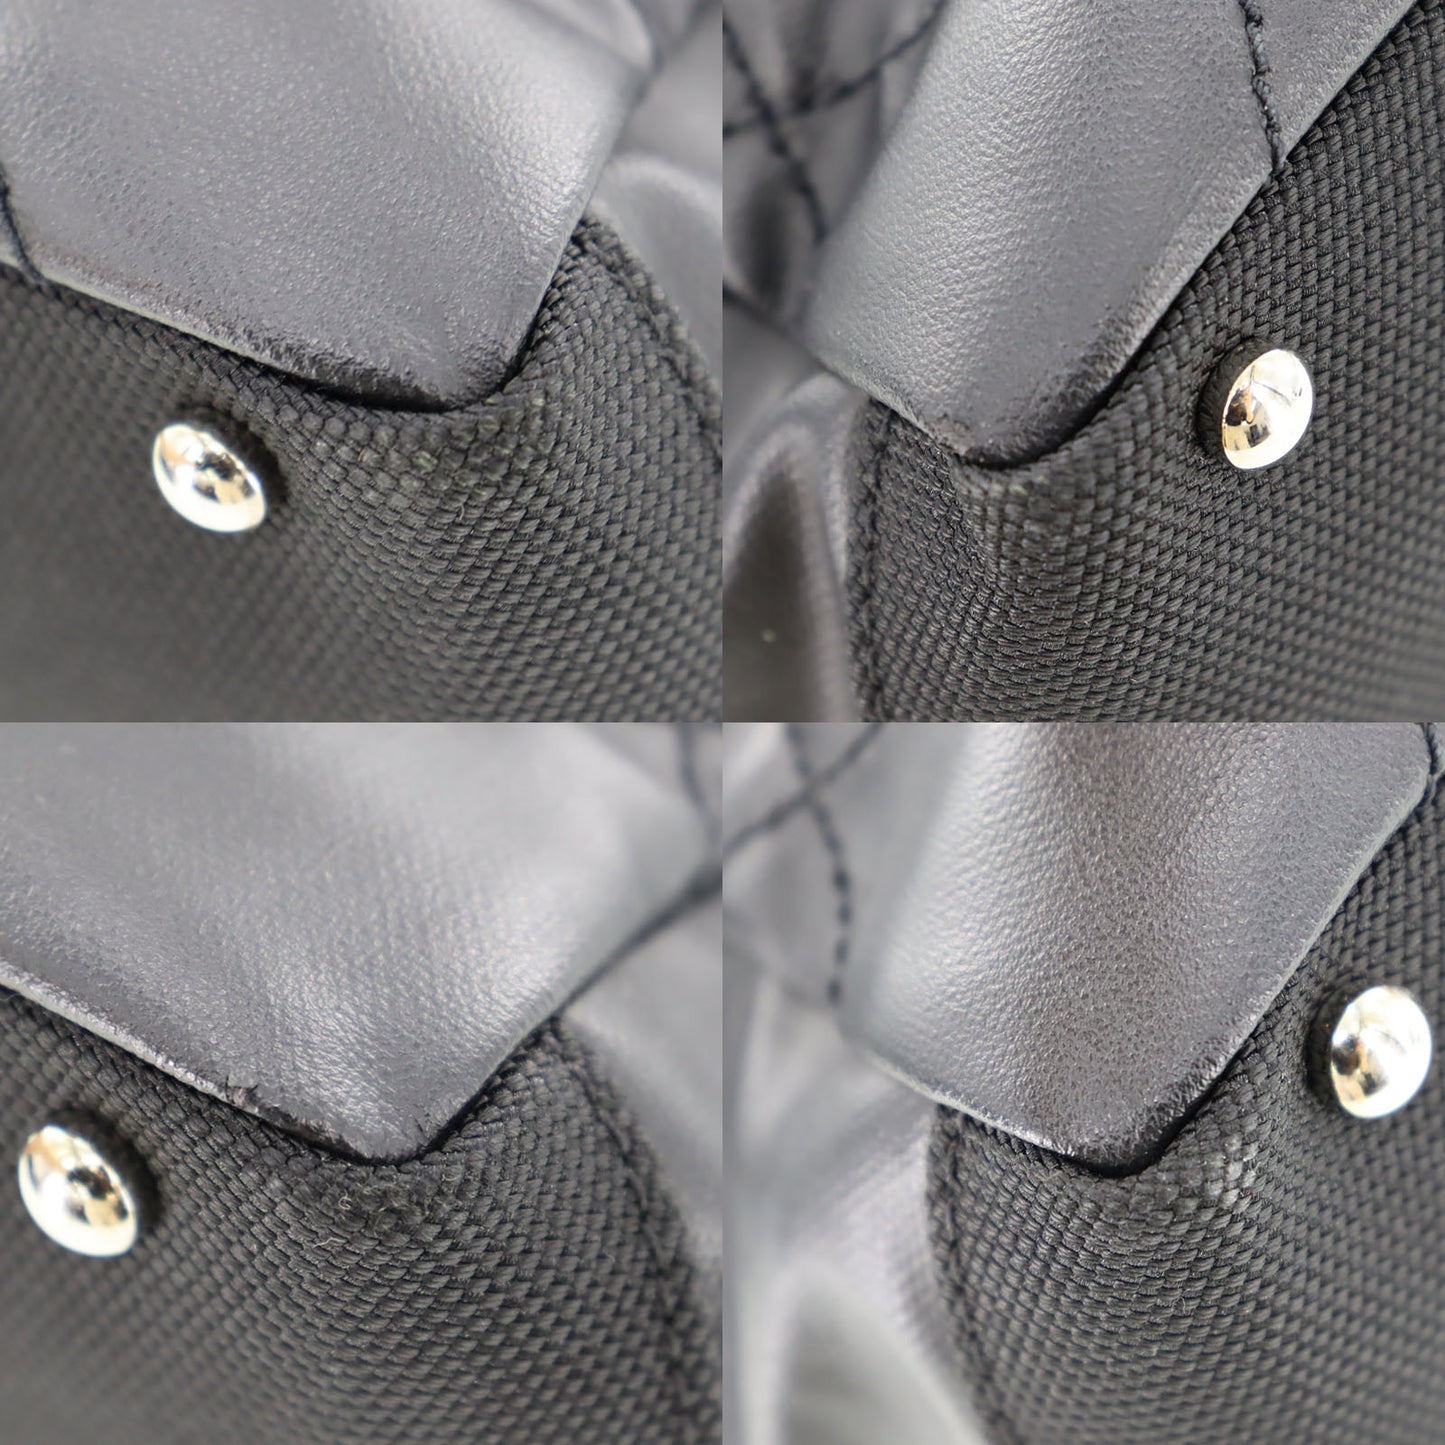 CHANEL Paris Biarritz Handbag Black Leather Italy Vintage #BO252